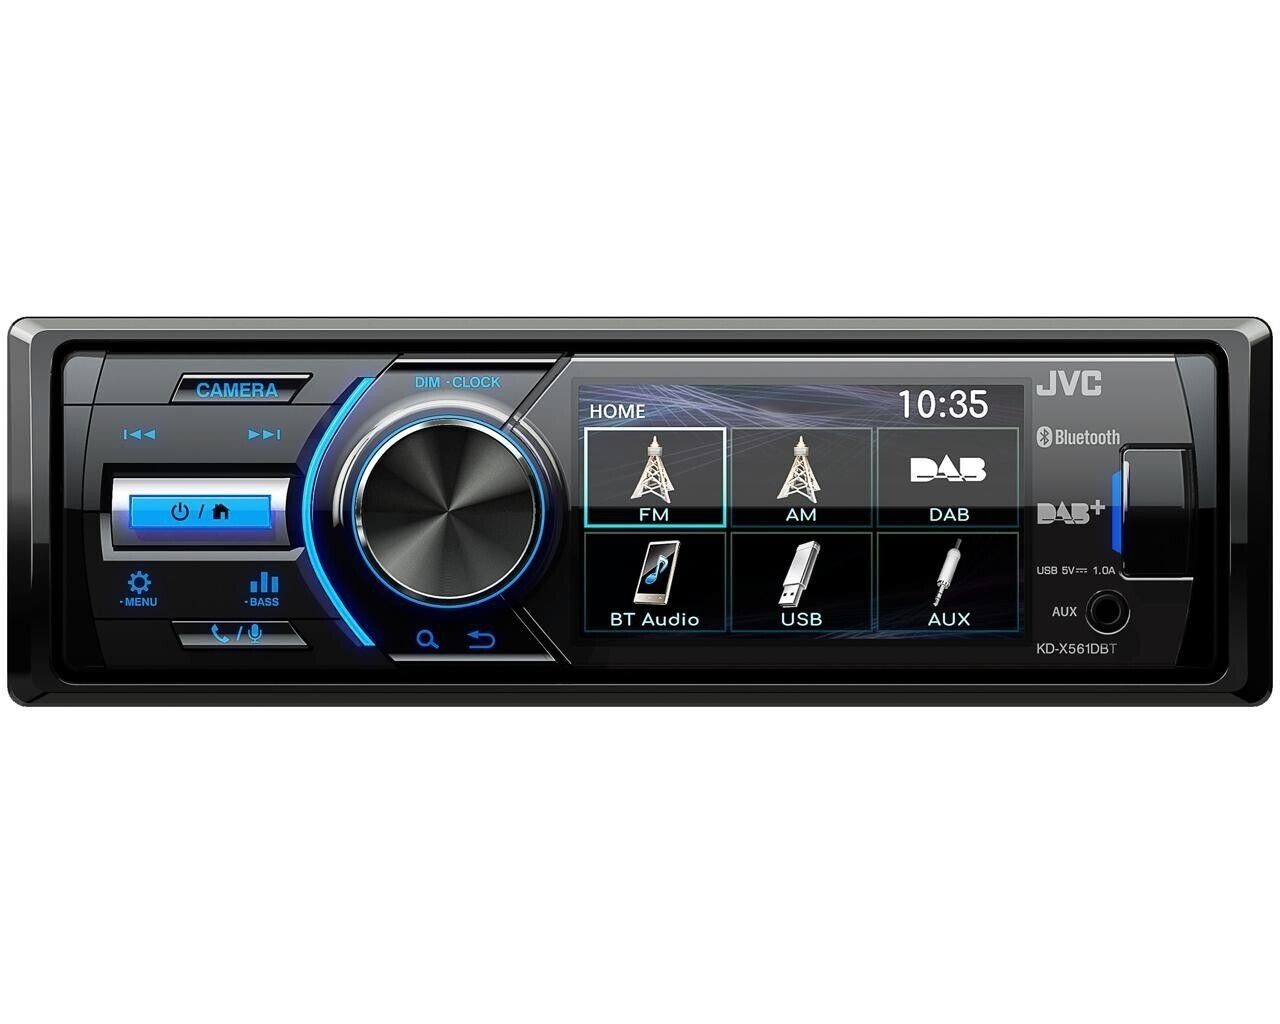 DSX JVC TFT USB (Digitalradio W) VW Bj 03-08 (DAB), DAB+ Radio Autoradio inkl Bluetooth für Golf V 45,00 5 Antenne